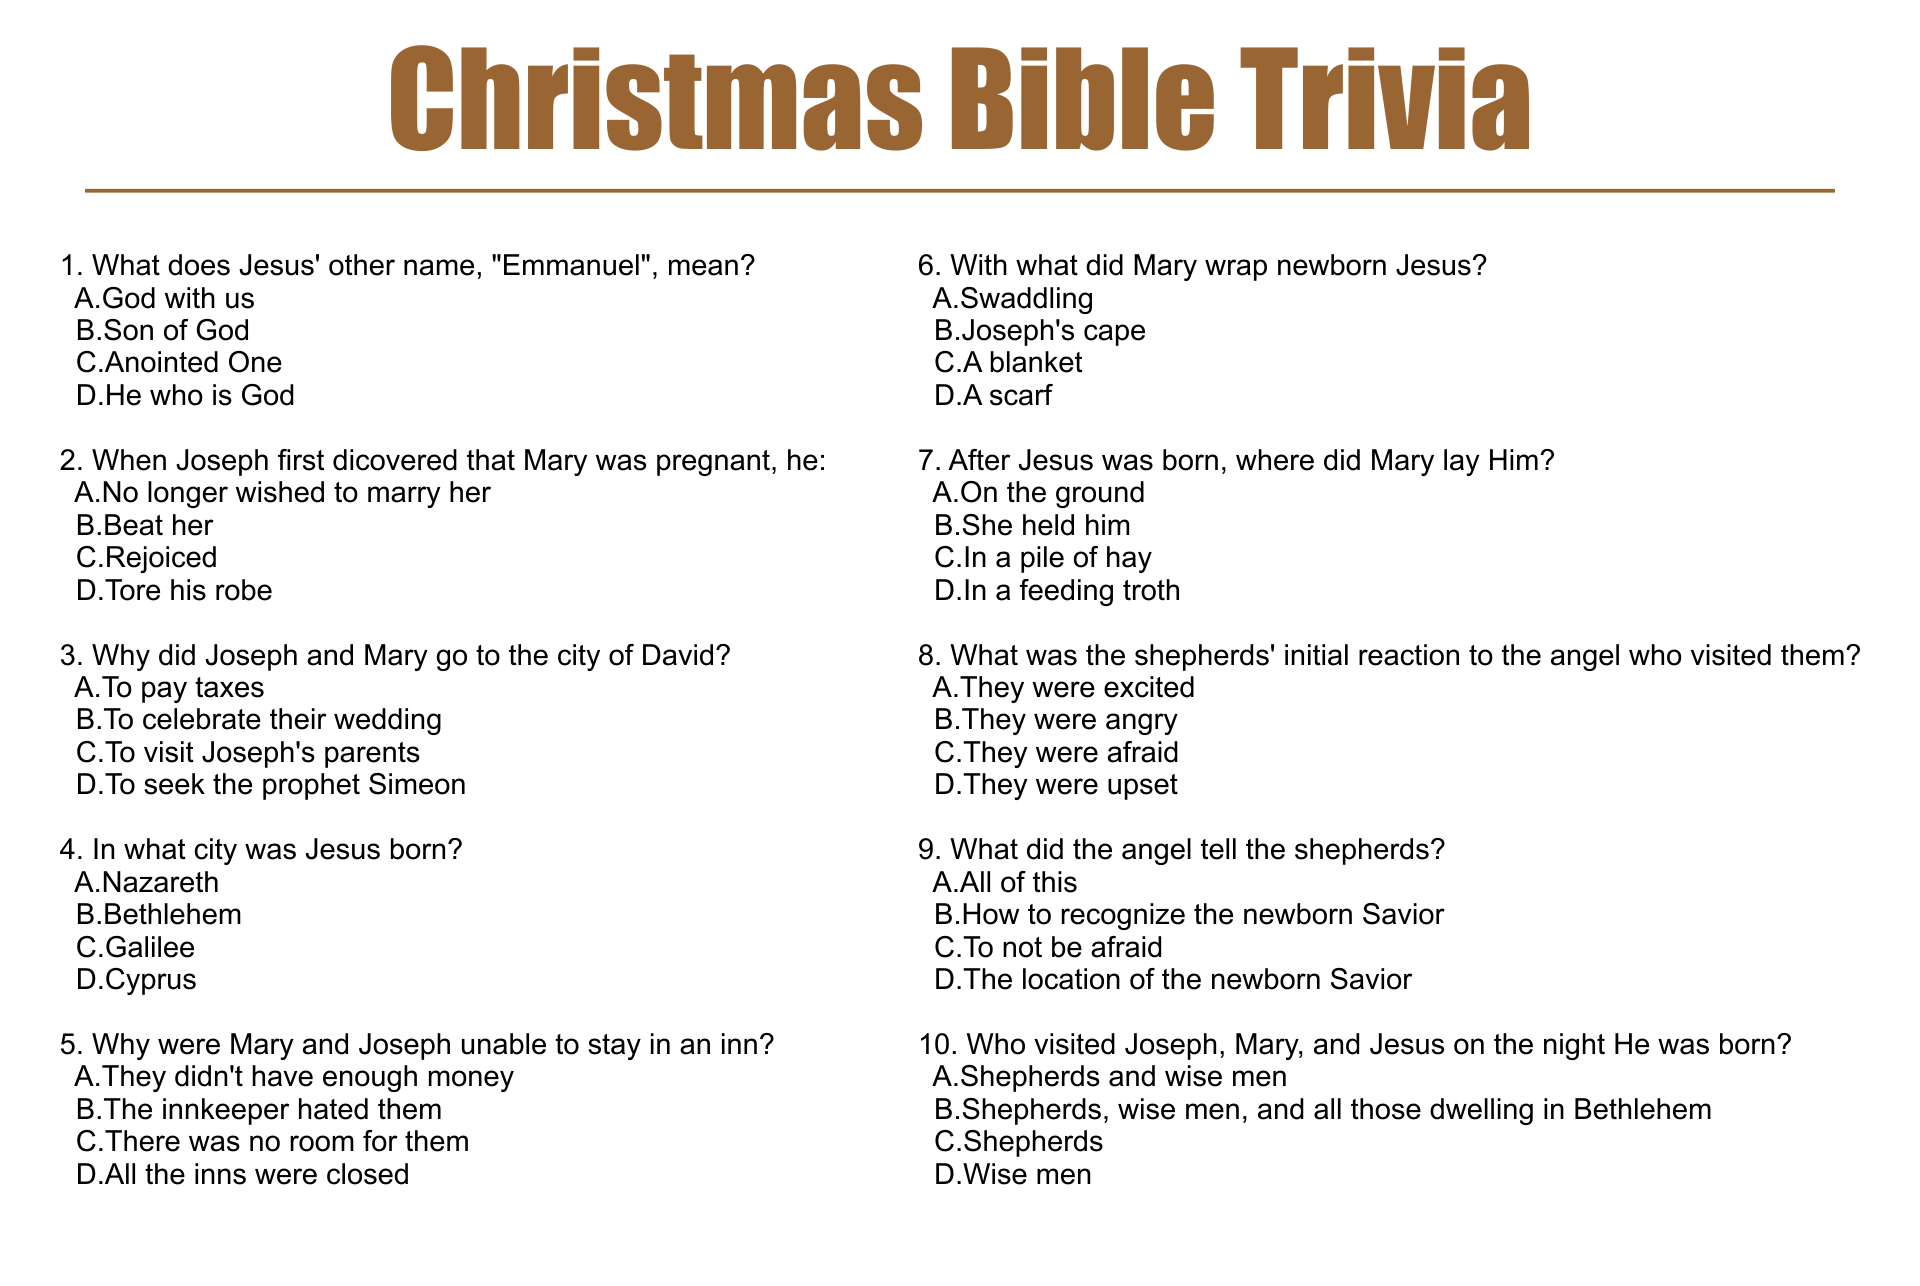 Bible Trivia Questions Printable